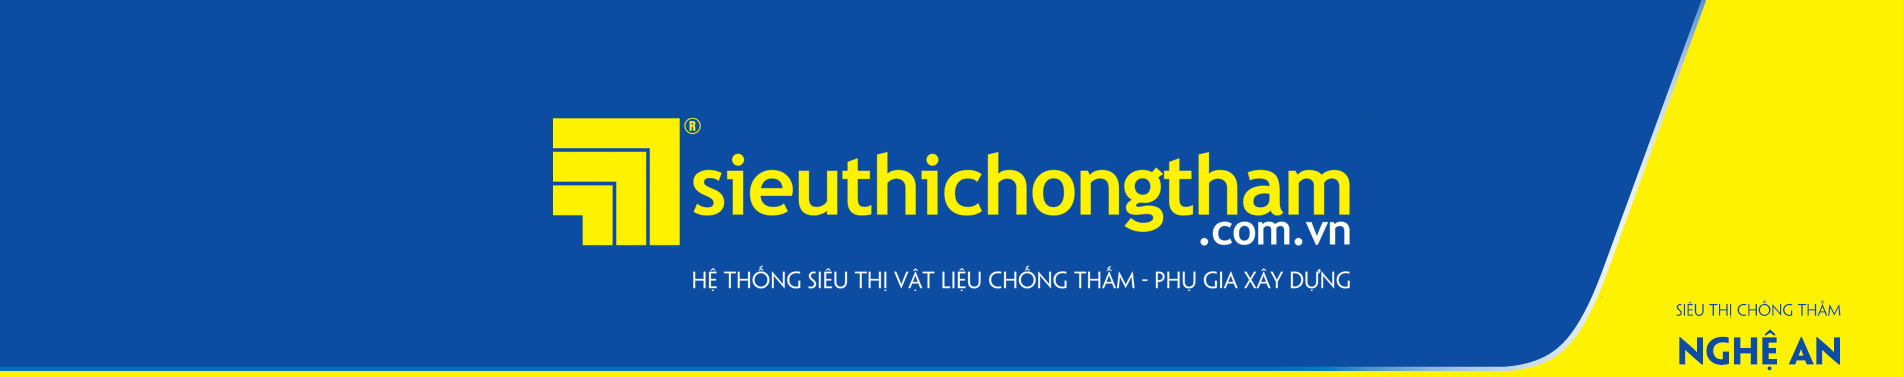 Sieu Thi Chong Tham Nghe An